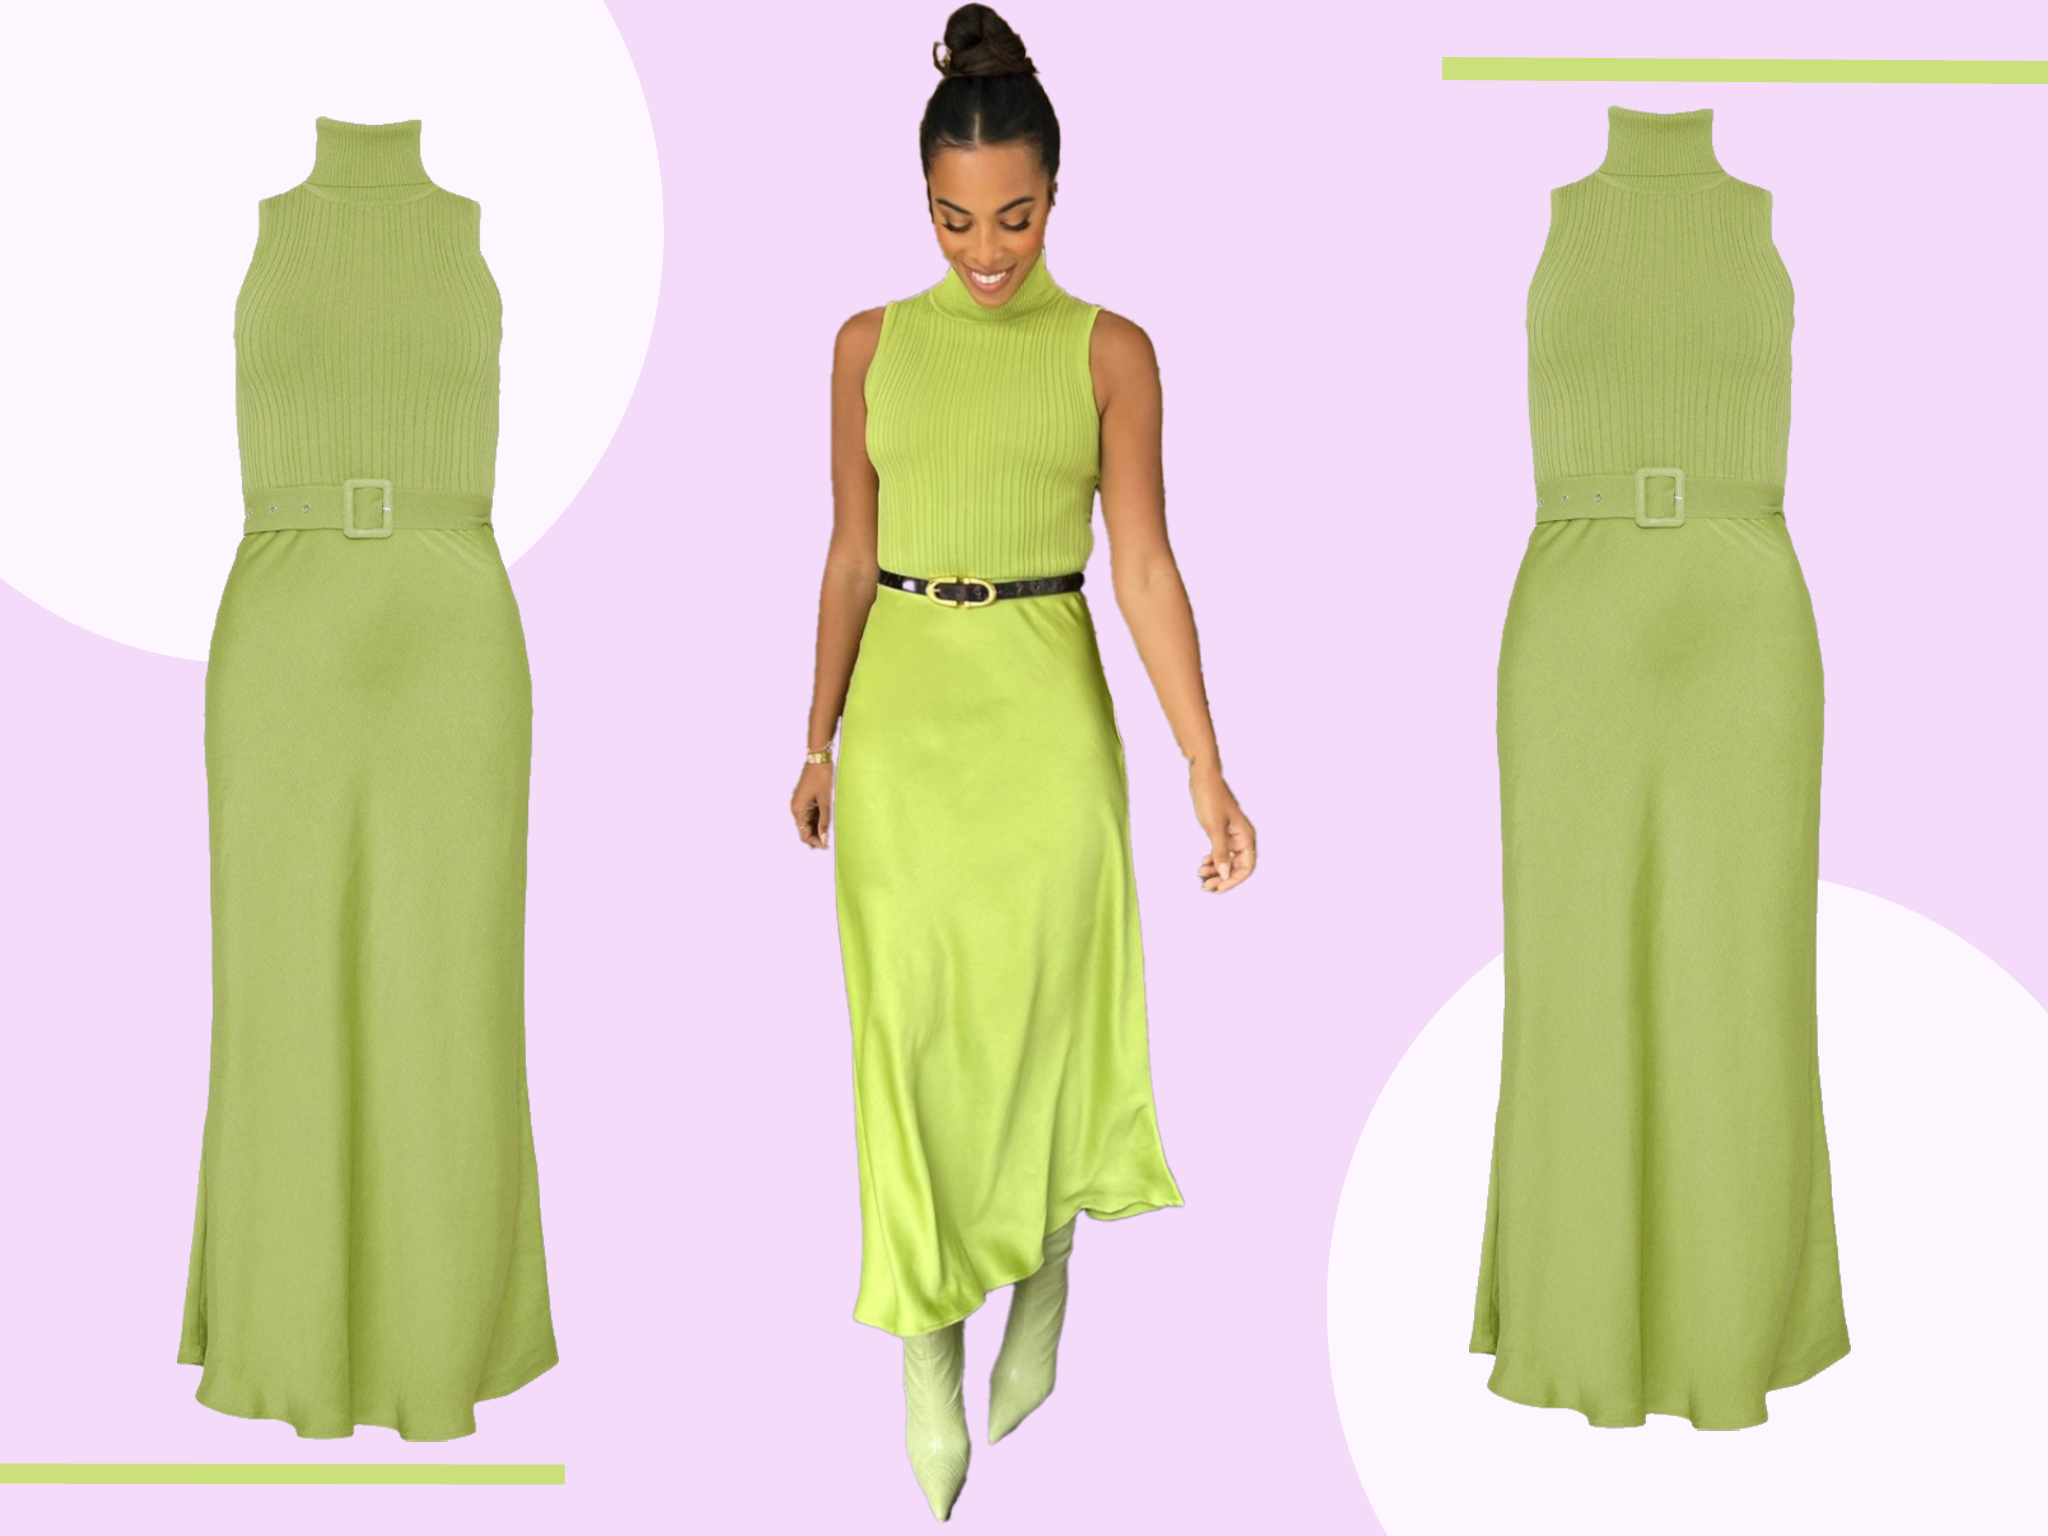 The lime green midi dress comes from high street brand Karen Millen